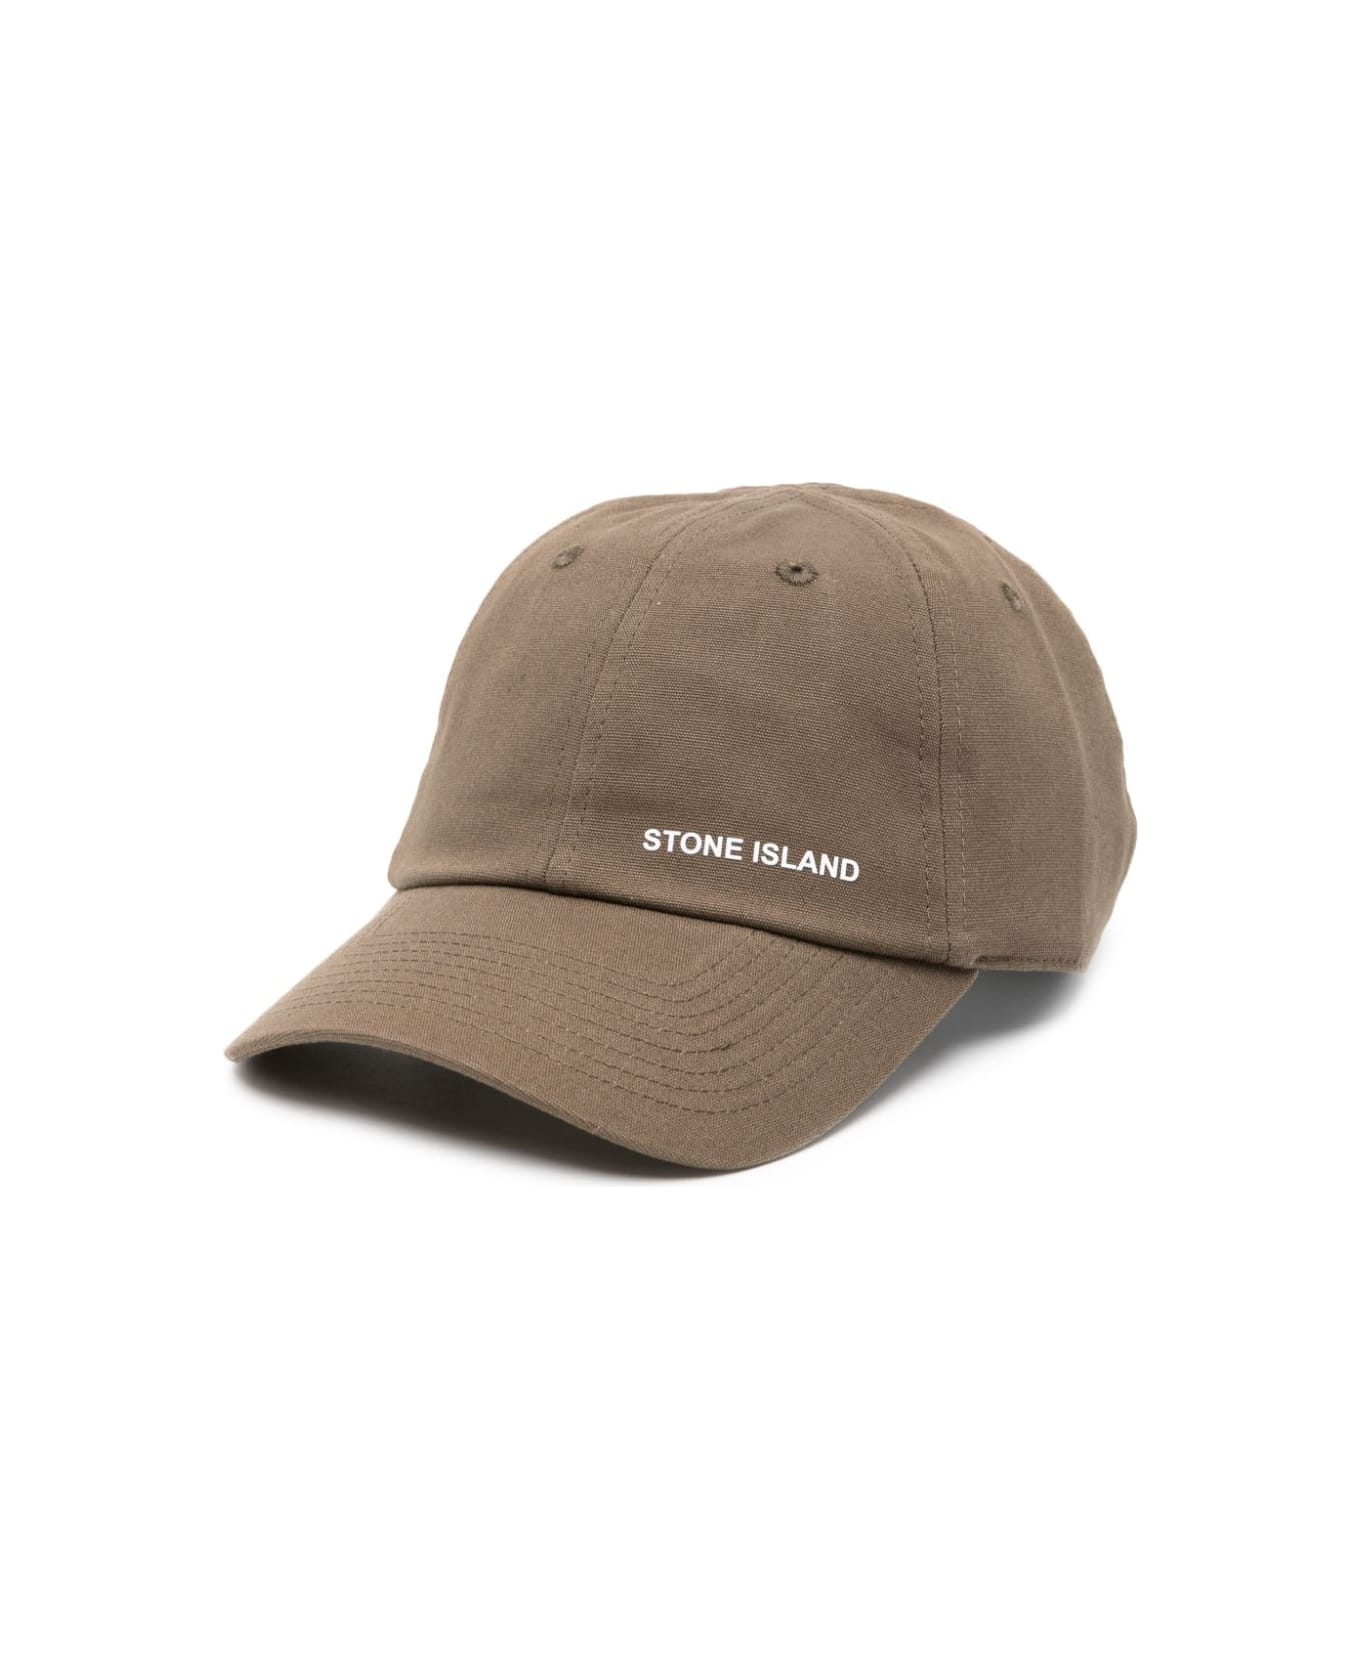 Stone Island Military Green Baseball Hat With Embossed Print - Brown 帽子